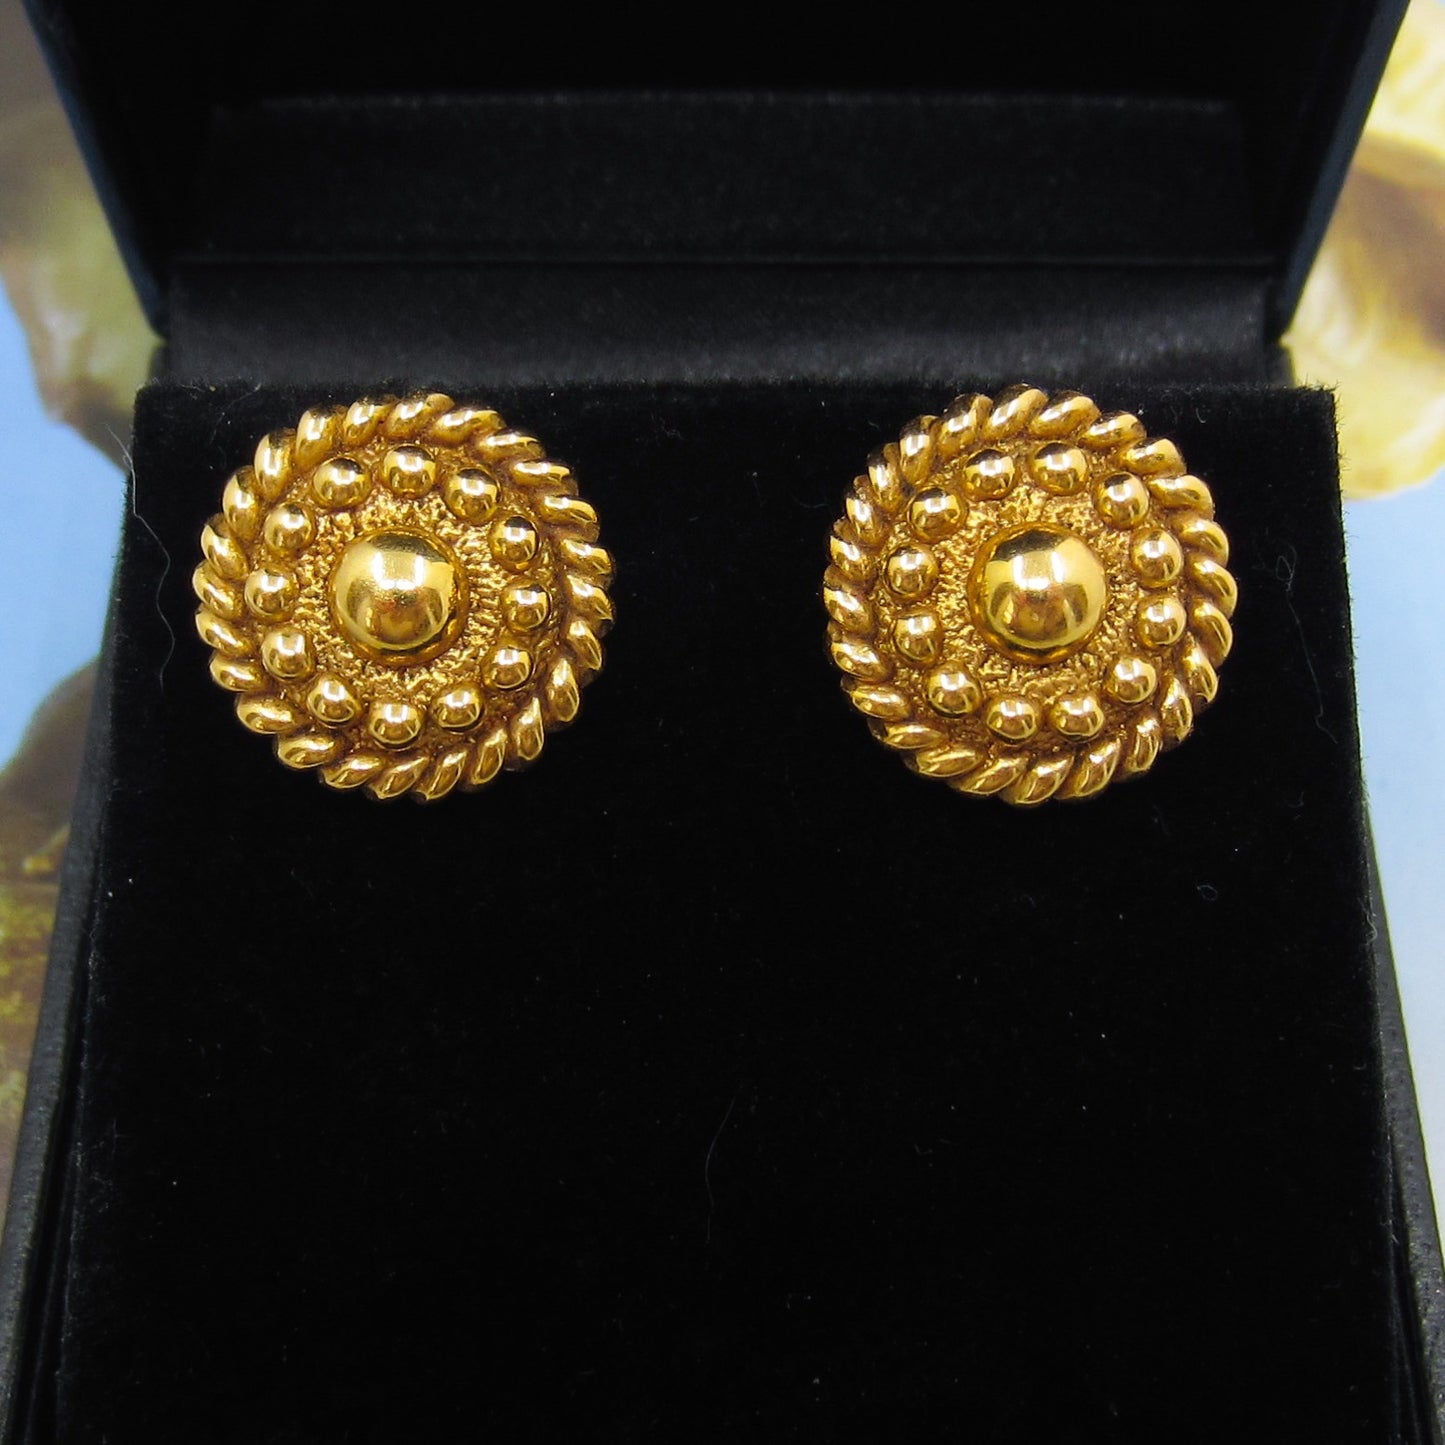 SOLD-Vintage Patterned Button Earrings 18k c. 1980